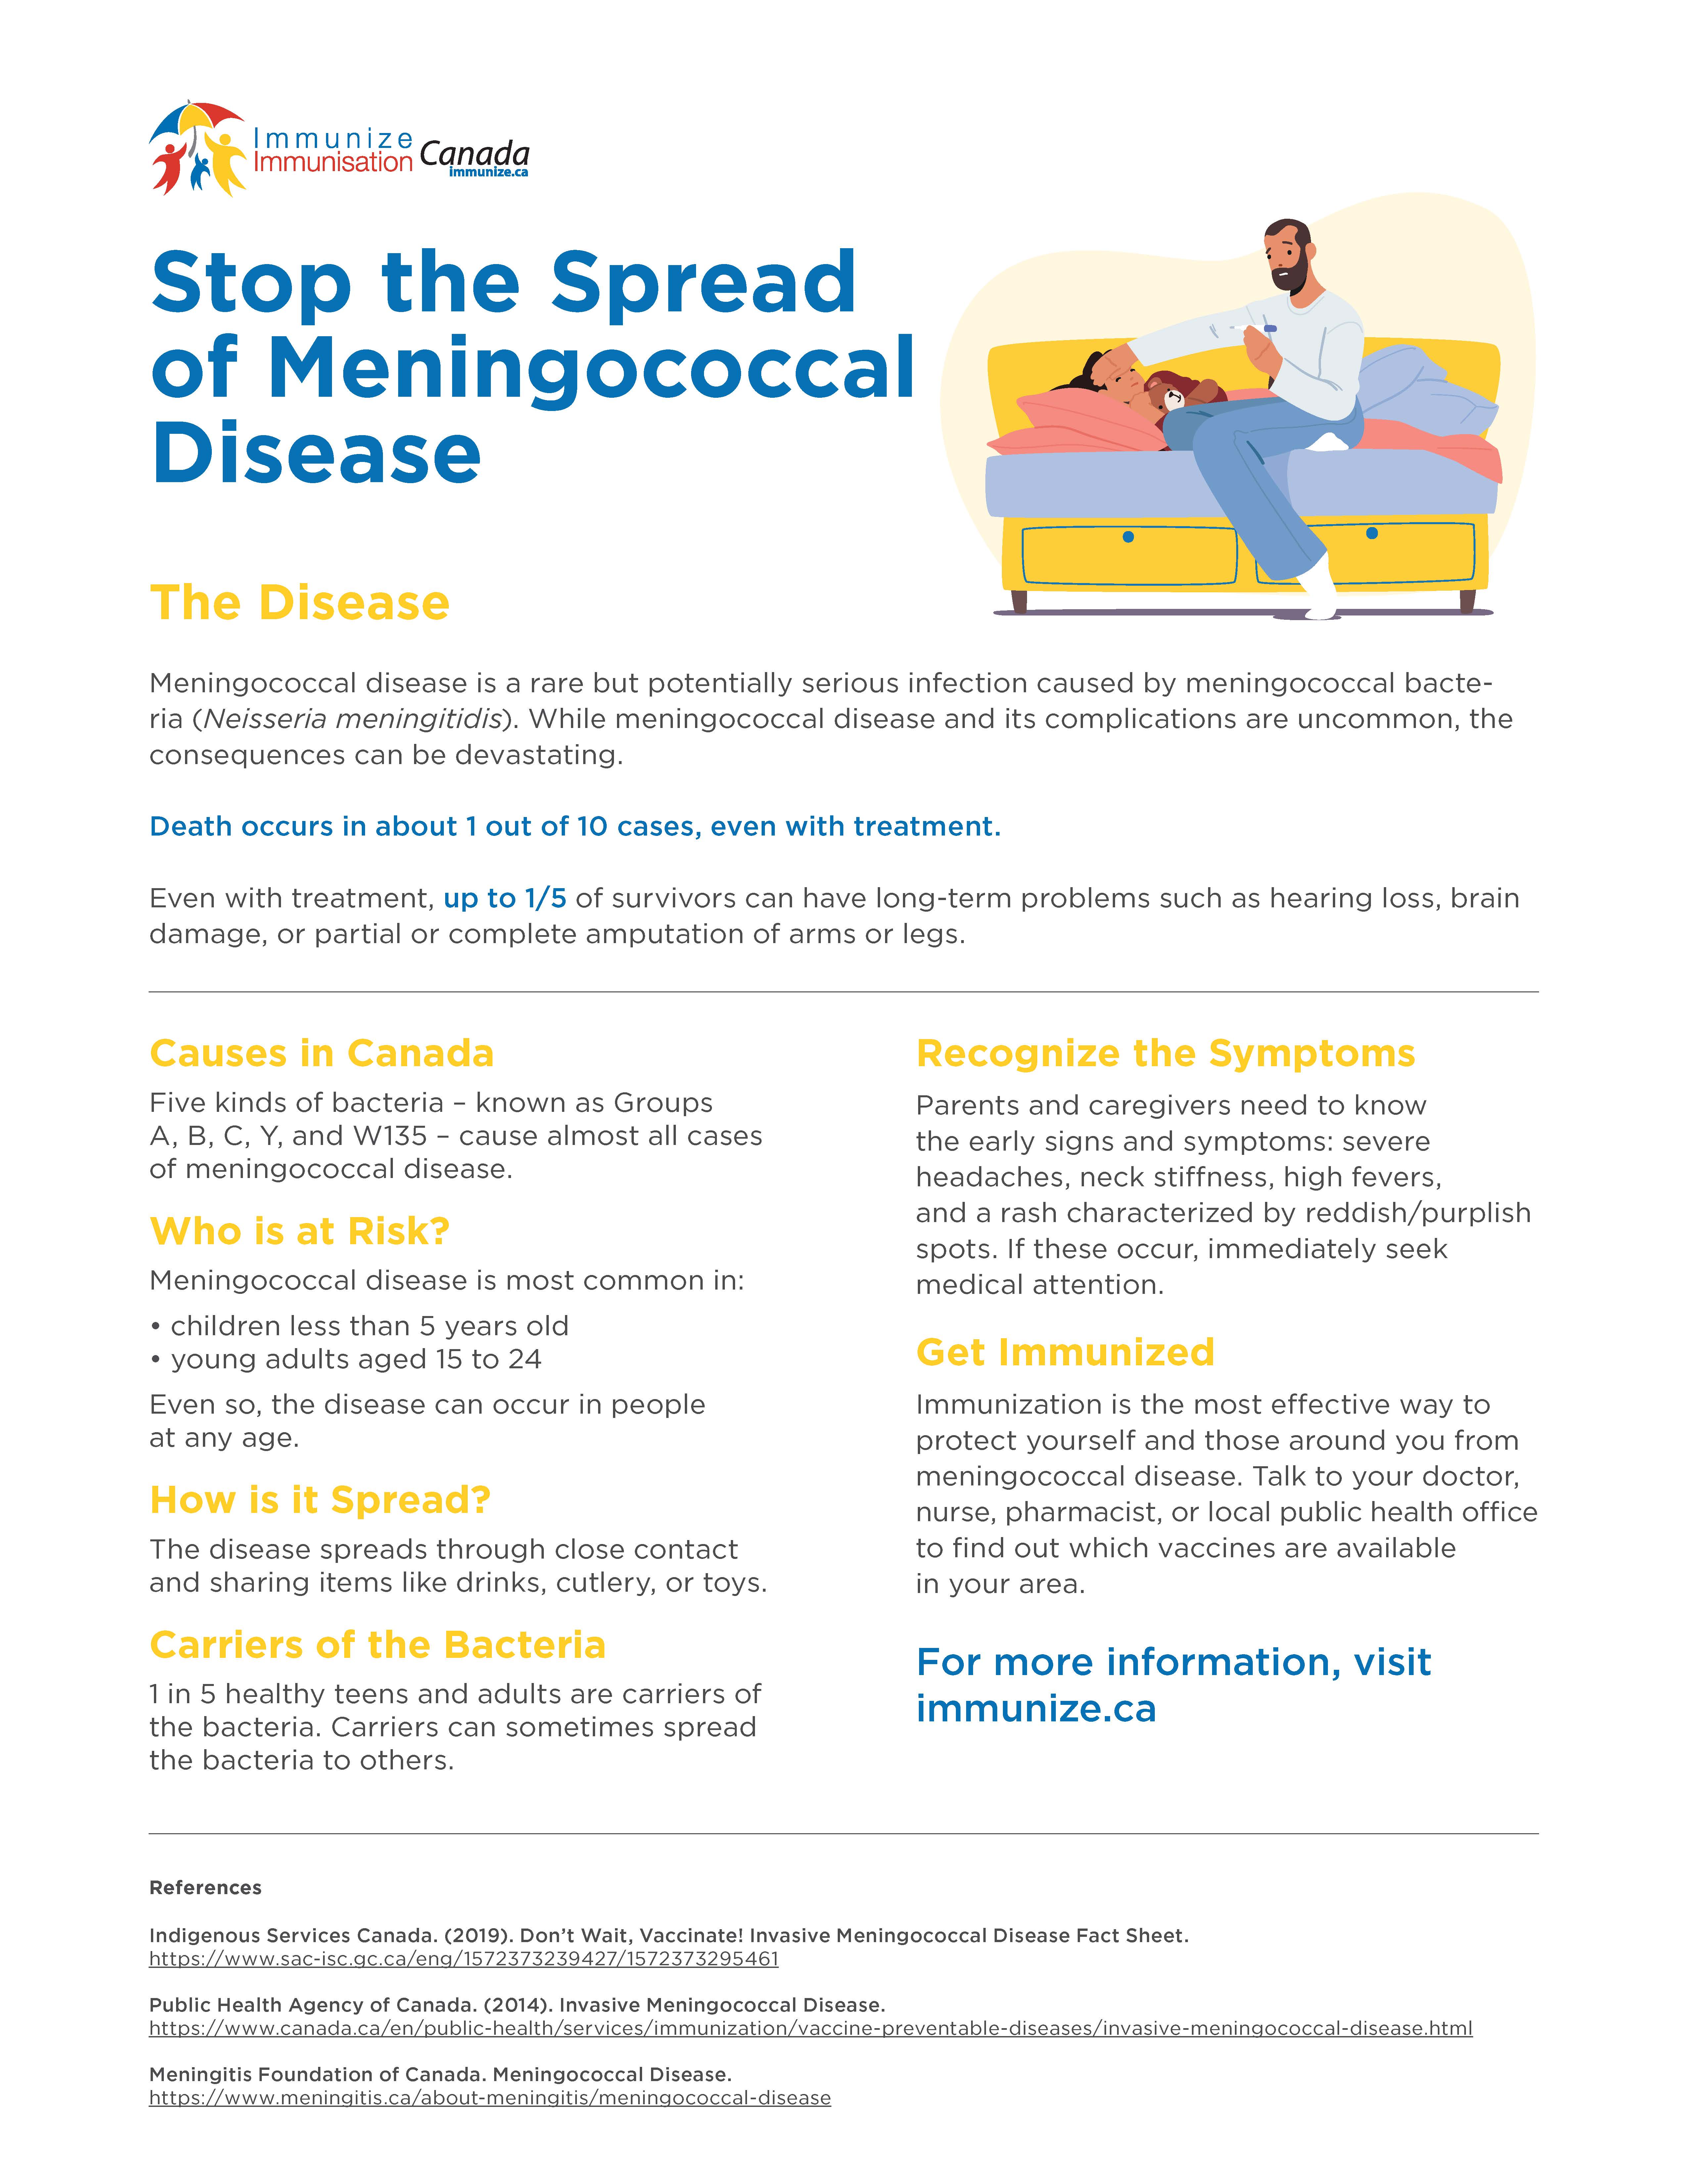 Stop the Spread of Meningococcal Disease - factsheet